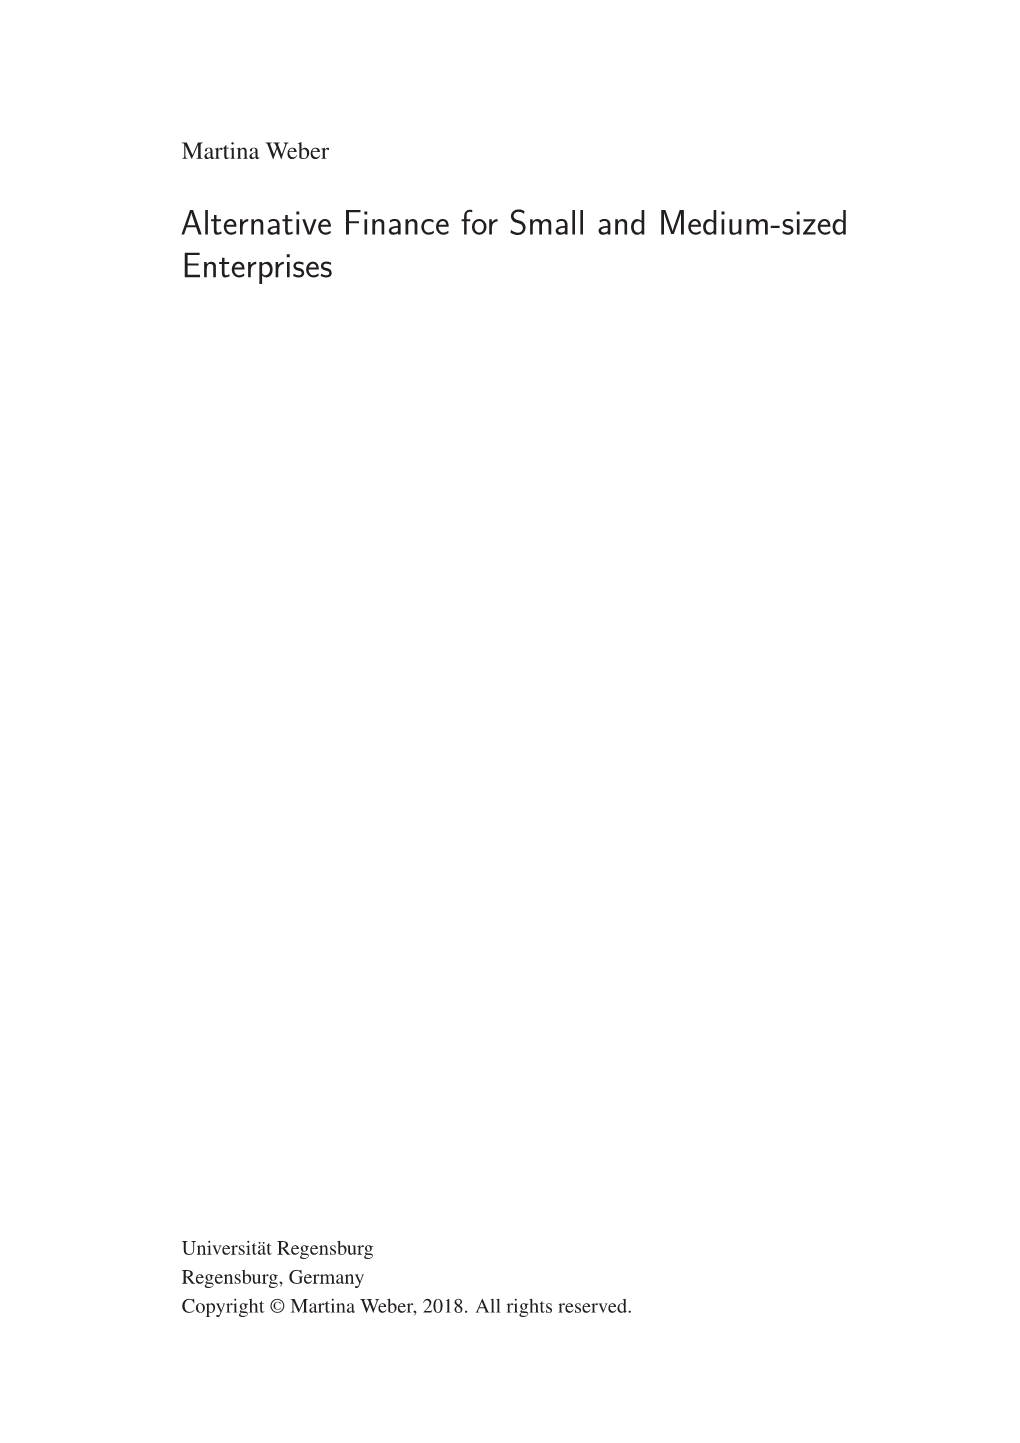 Alternative Finance for Small and Medium-Sized Enterprises